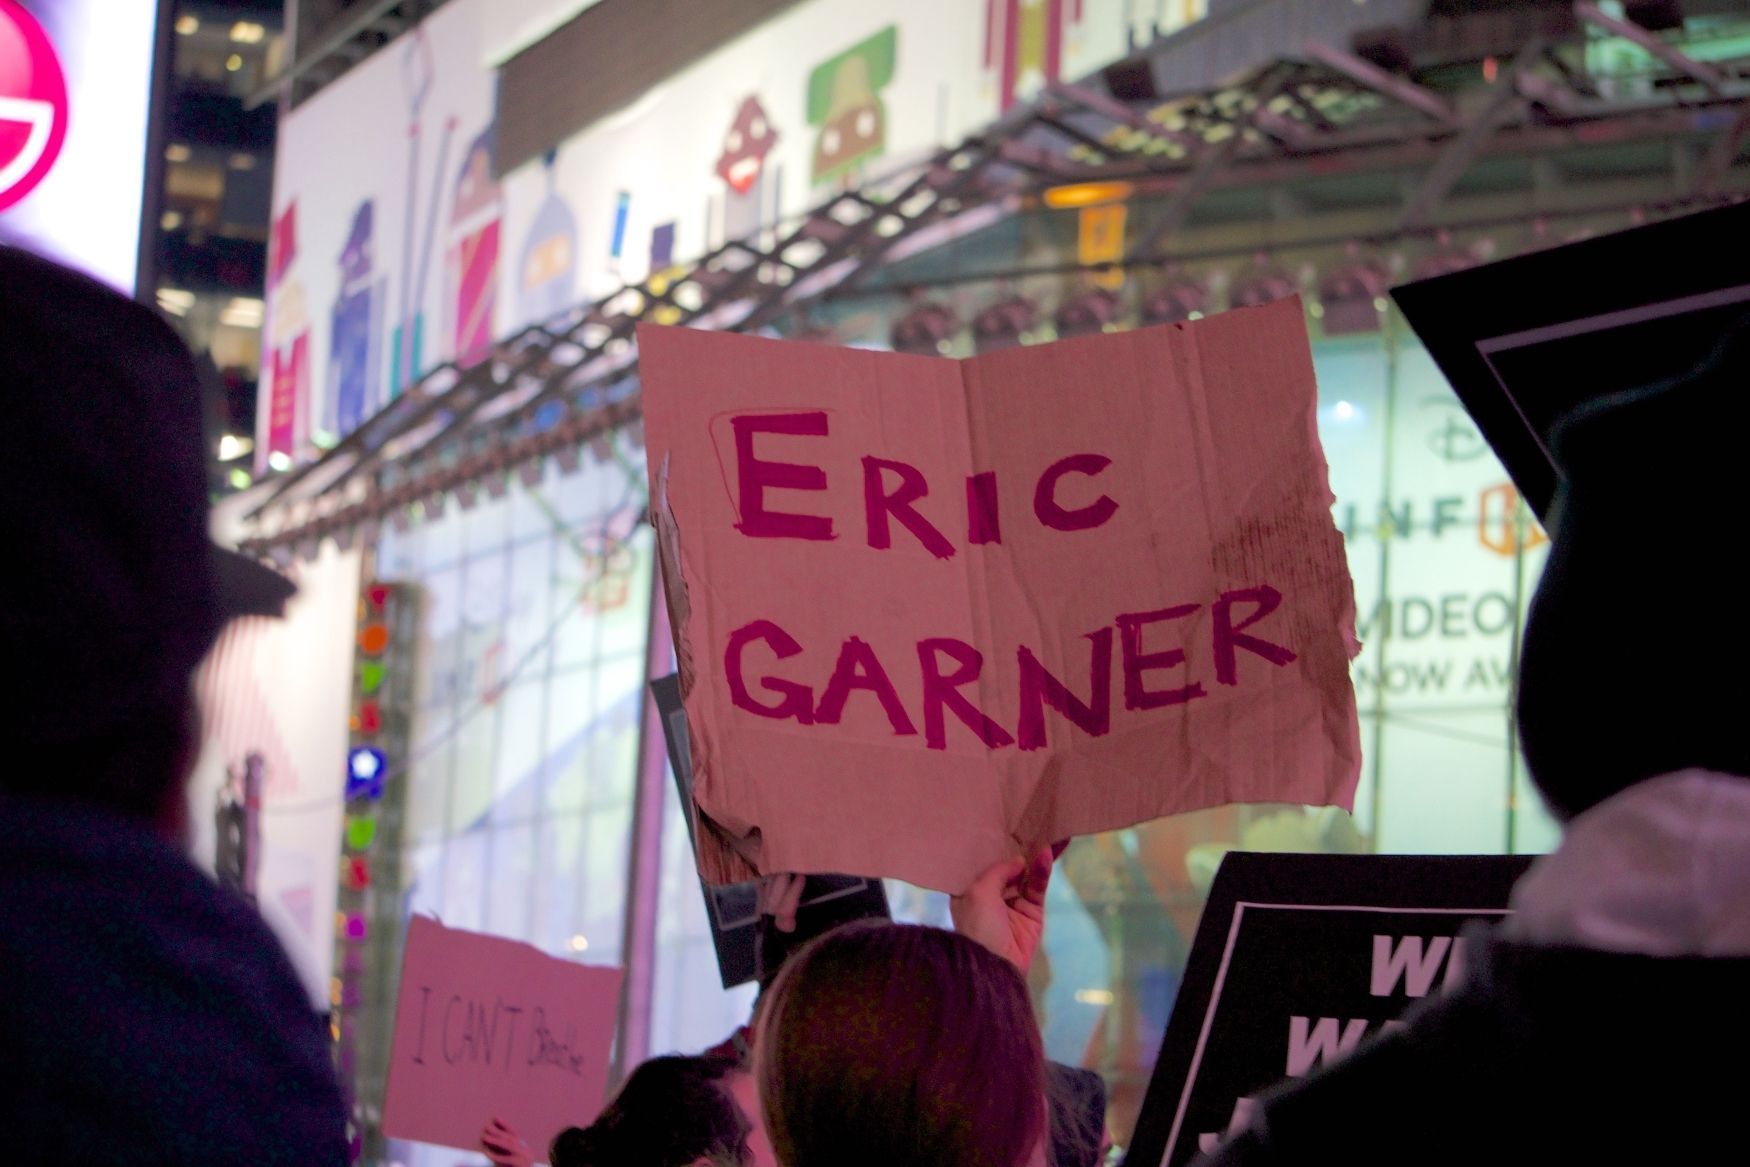 Eric Garner